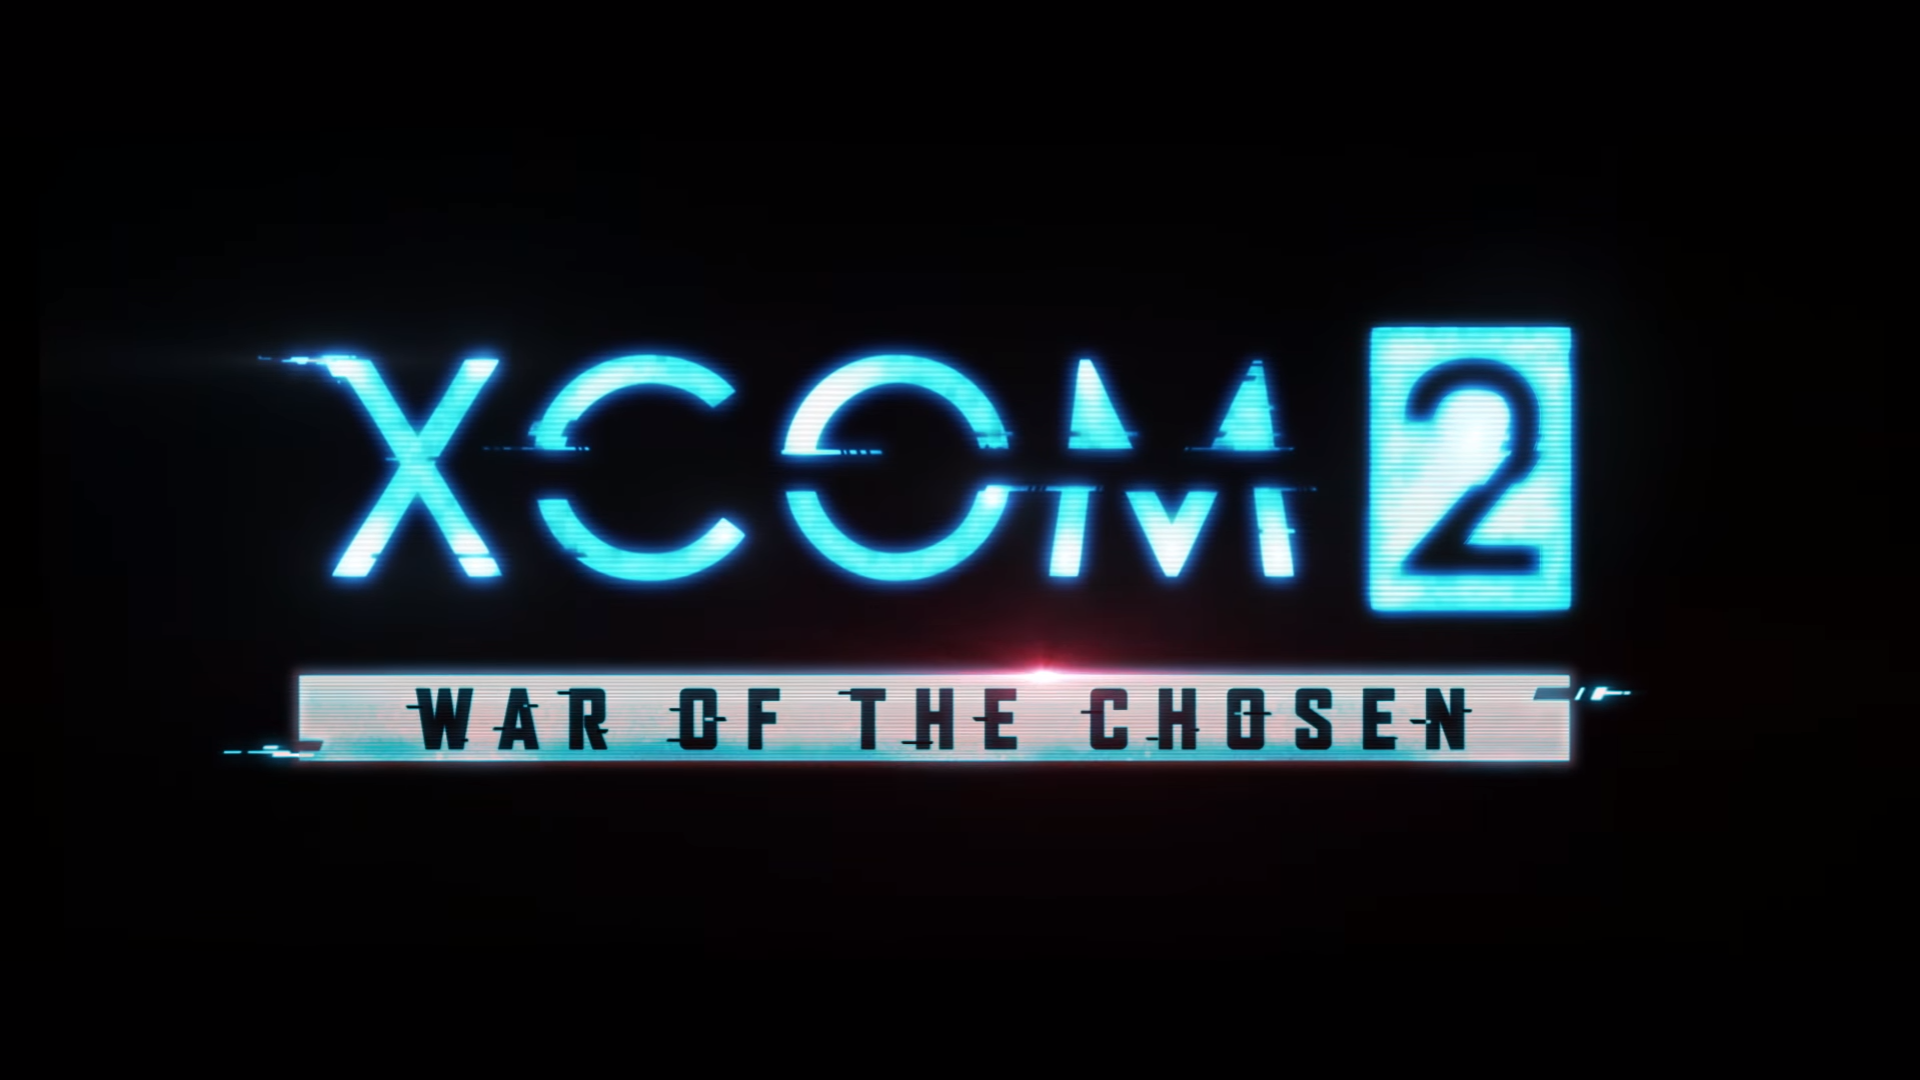 xcom 2 war of the chosen file size